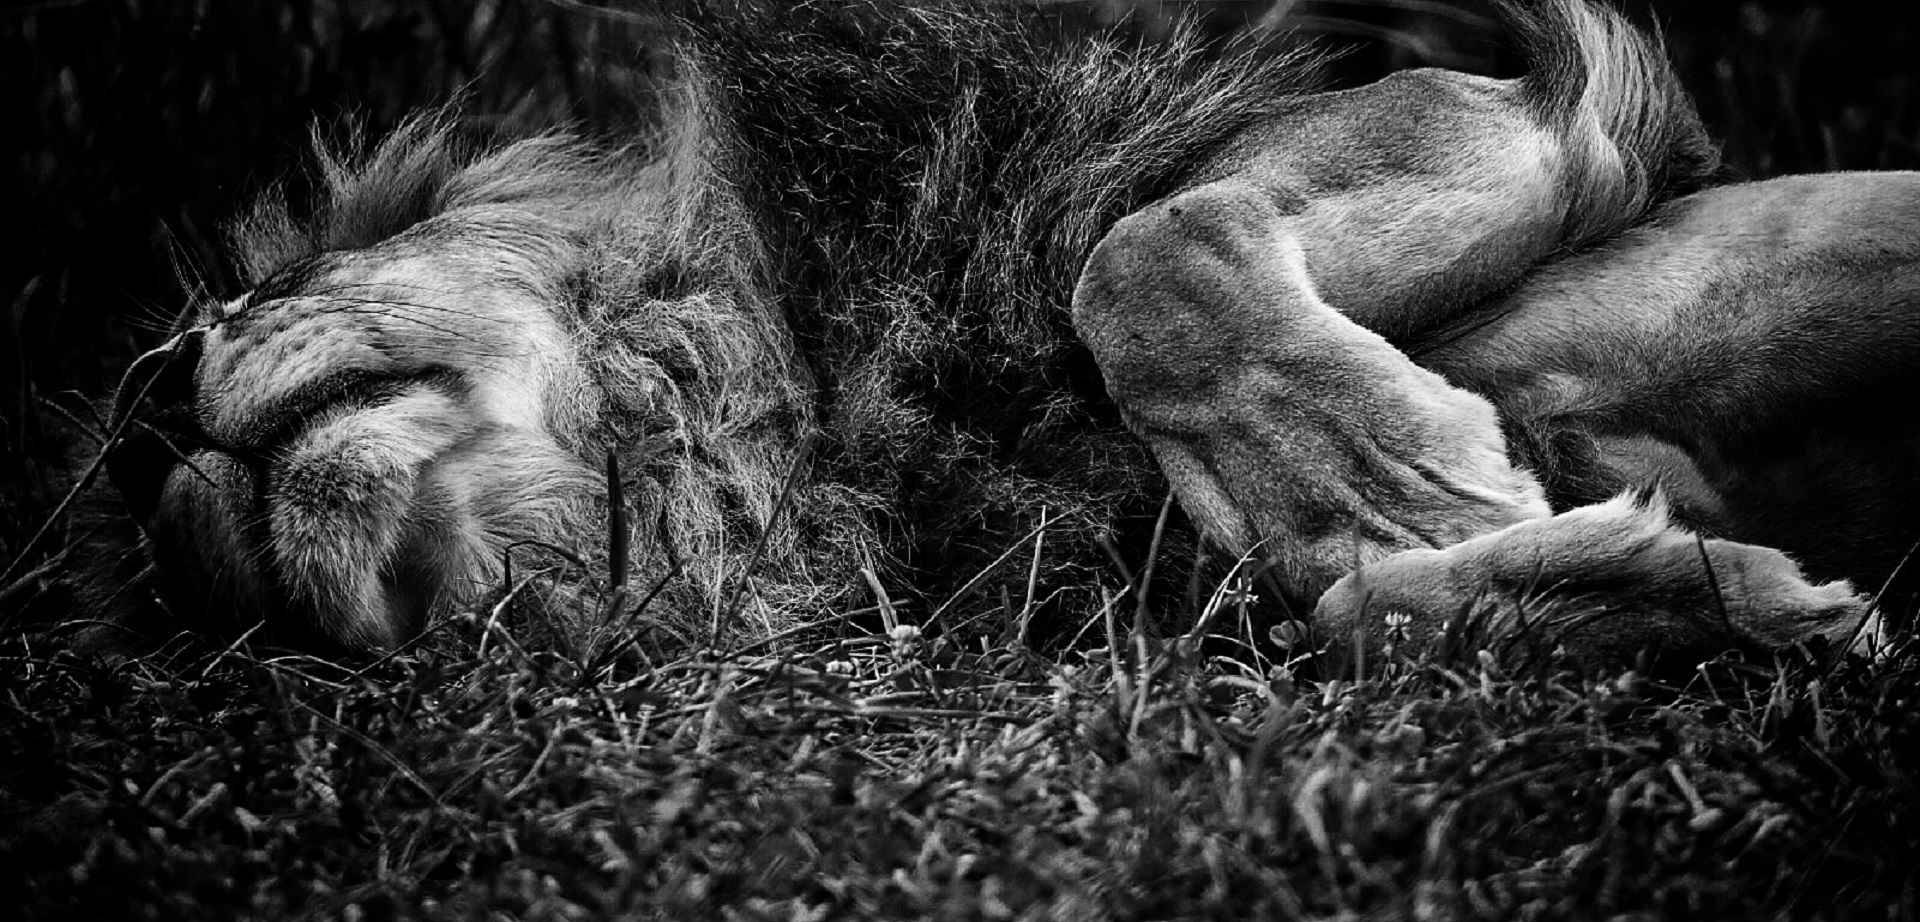 Sleeping lion photo